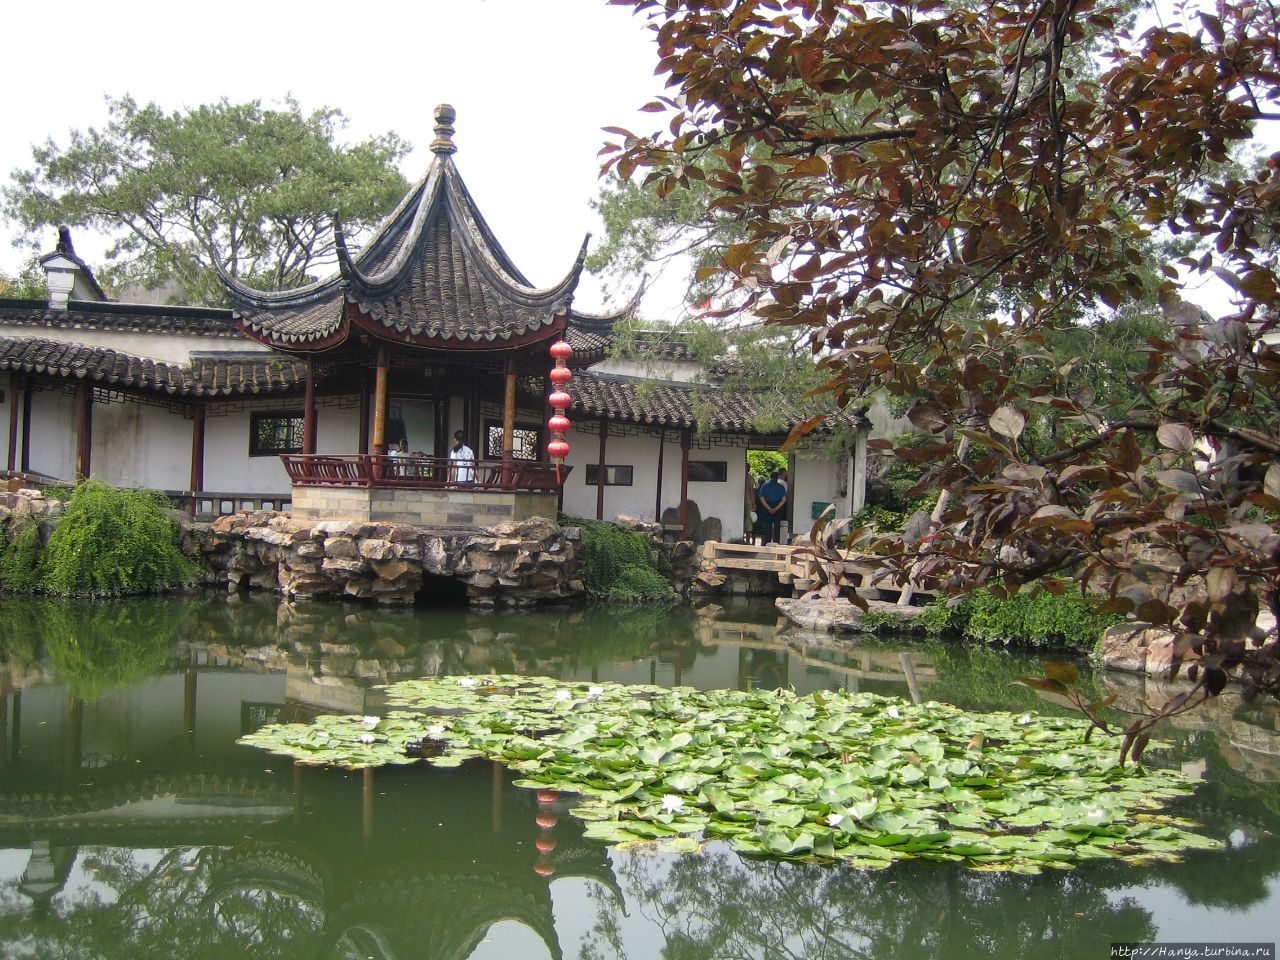 Сад  мастера сетей (сад рыбака) Сучжоу, Китай